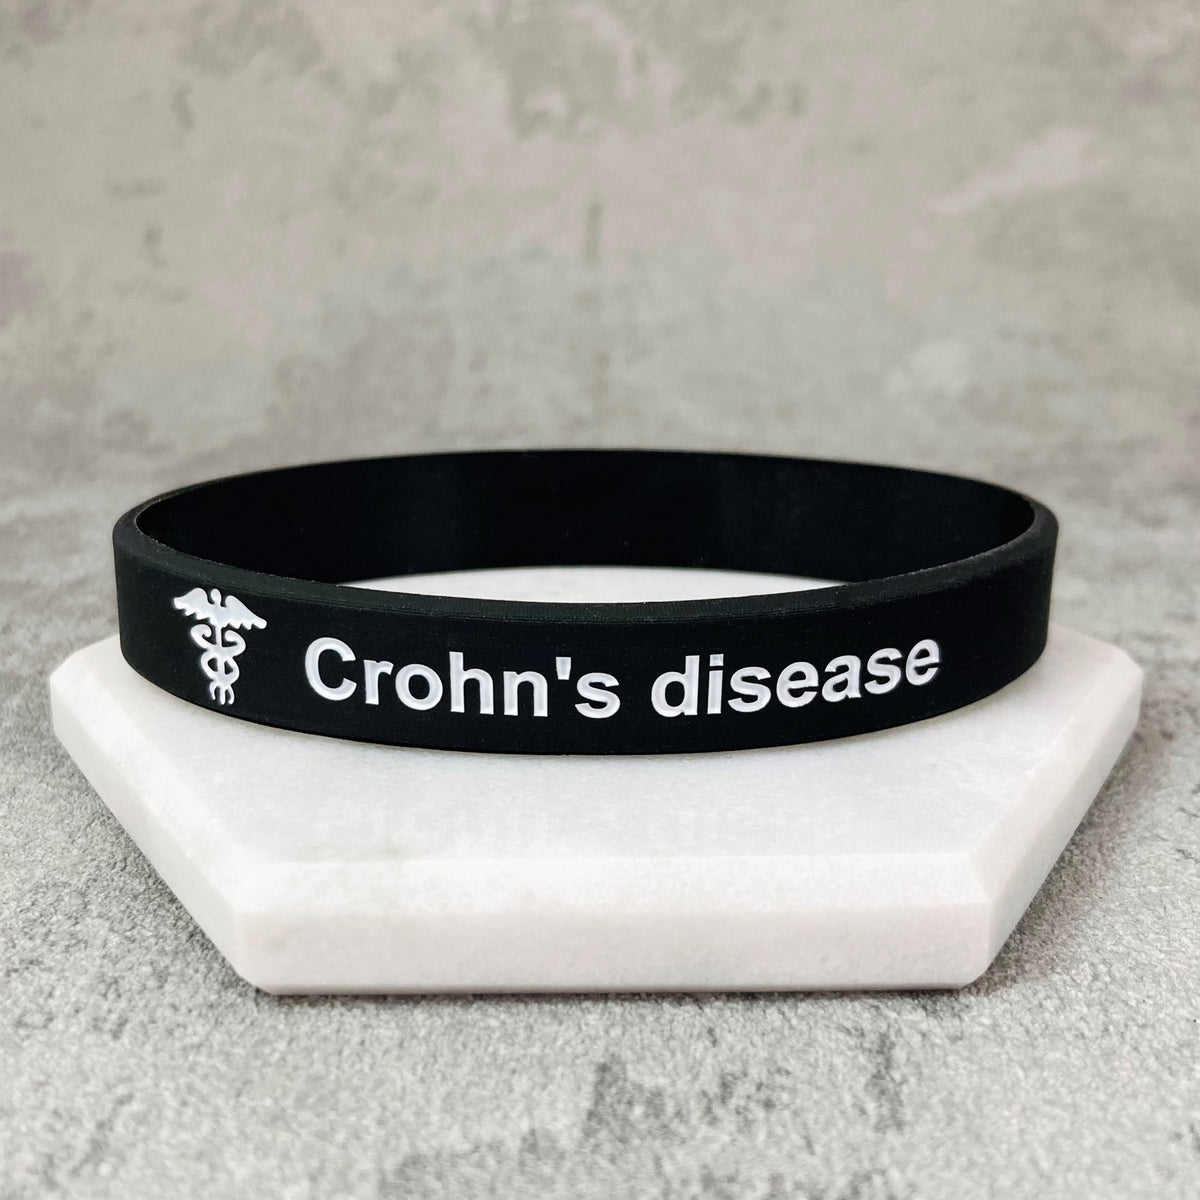 crohn's disease medical alert wristband silicone